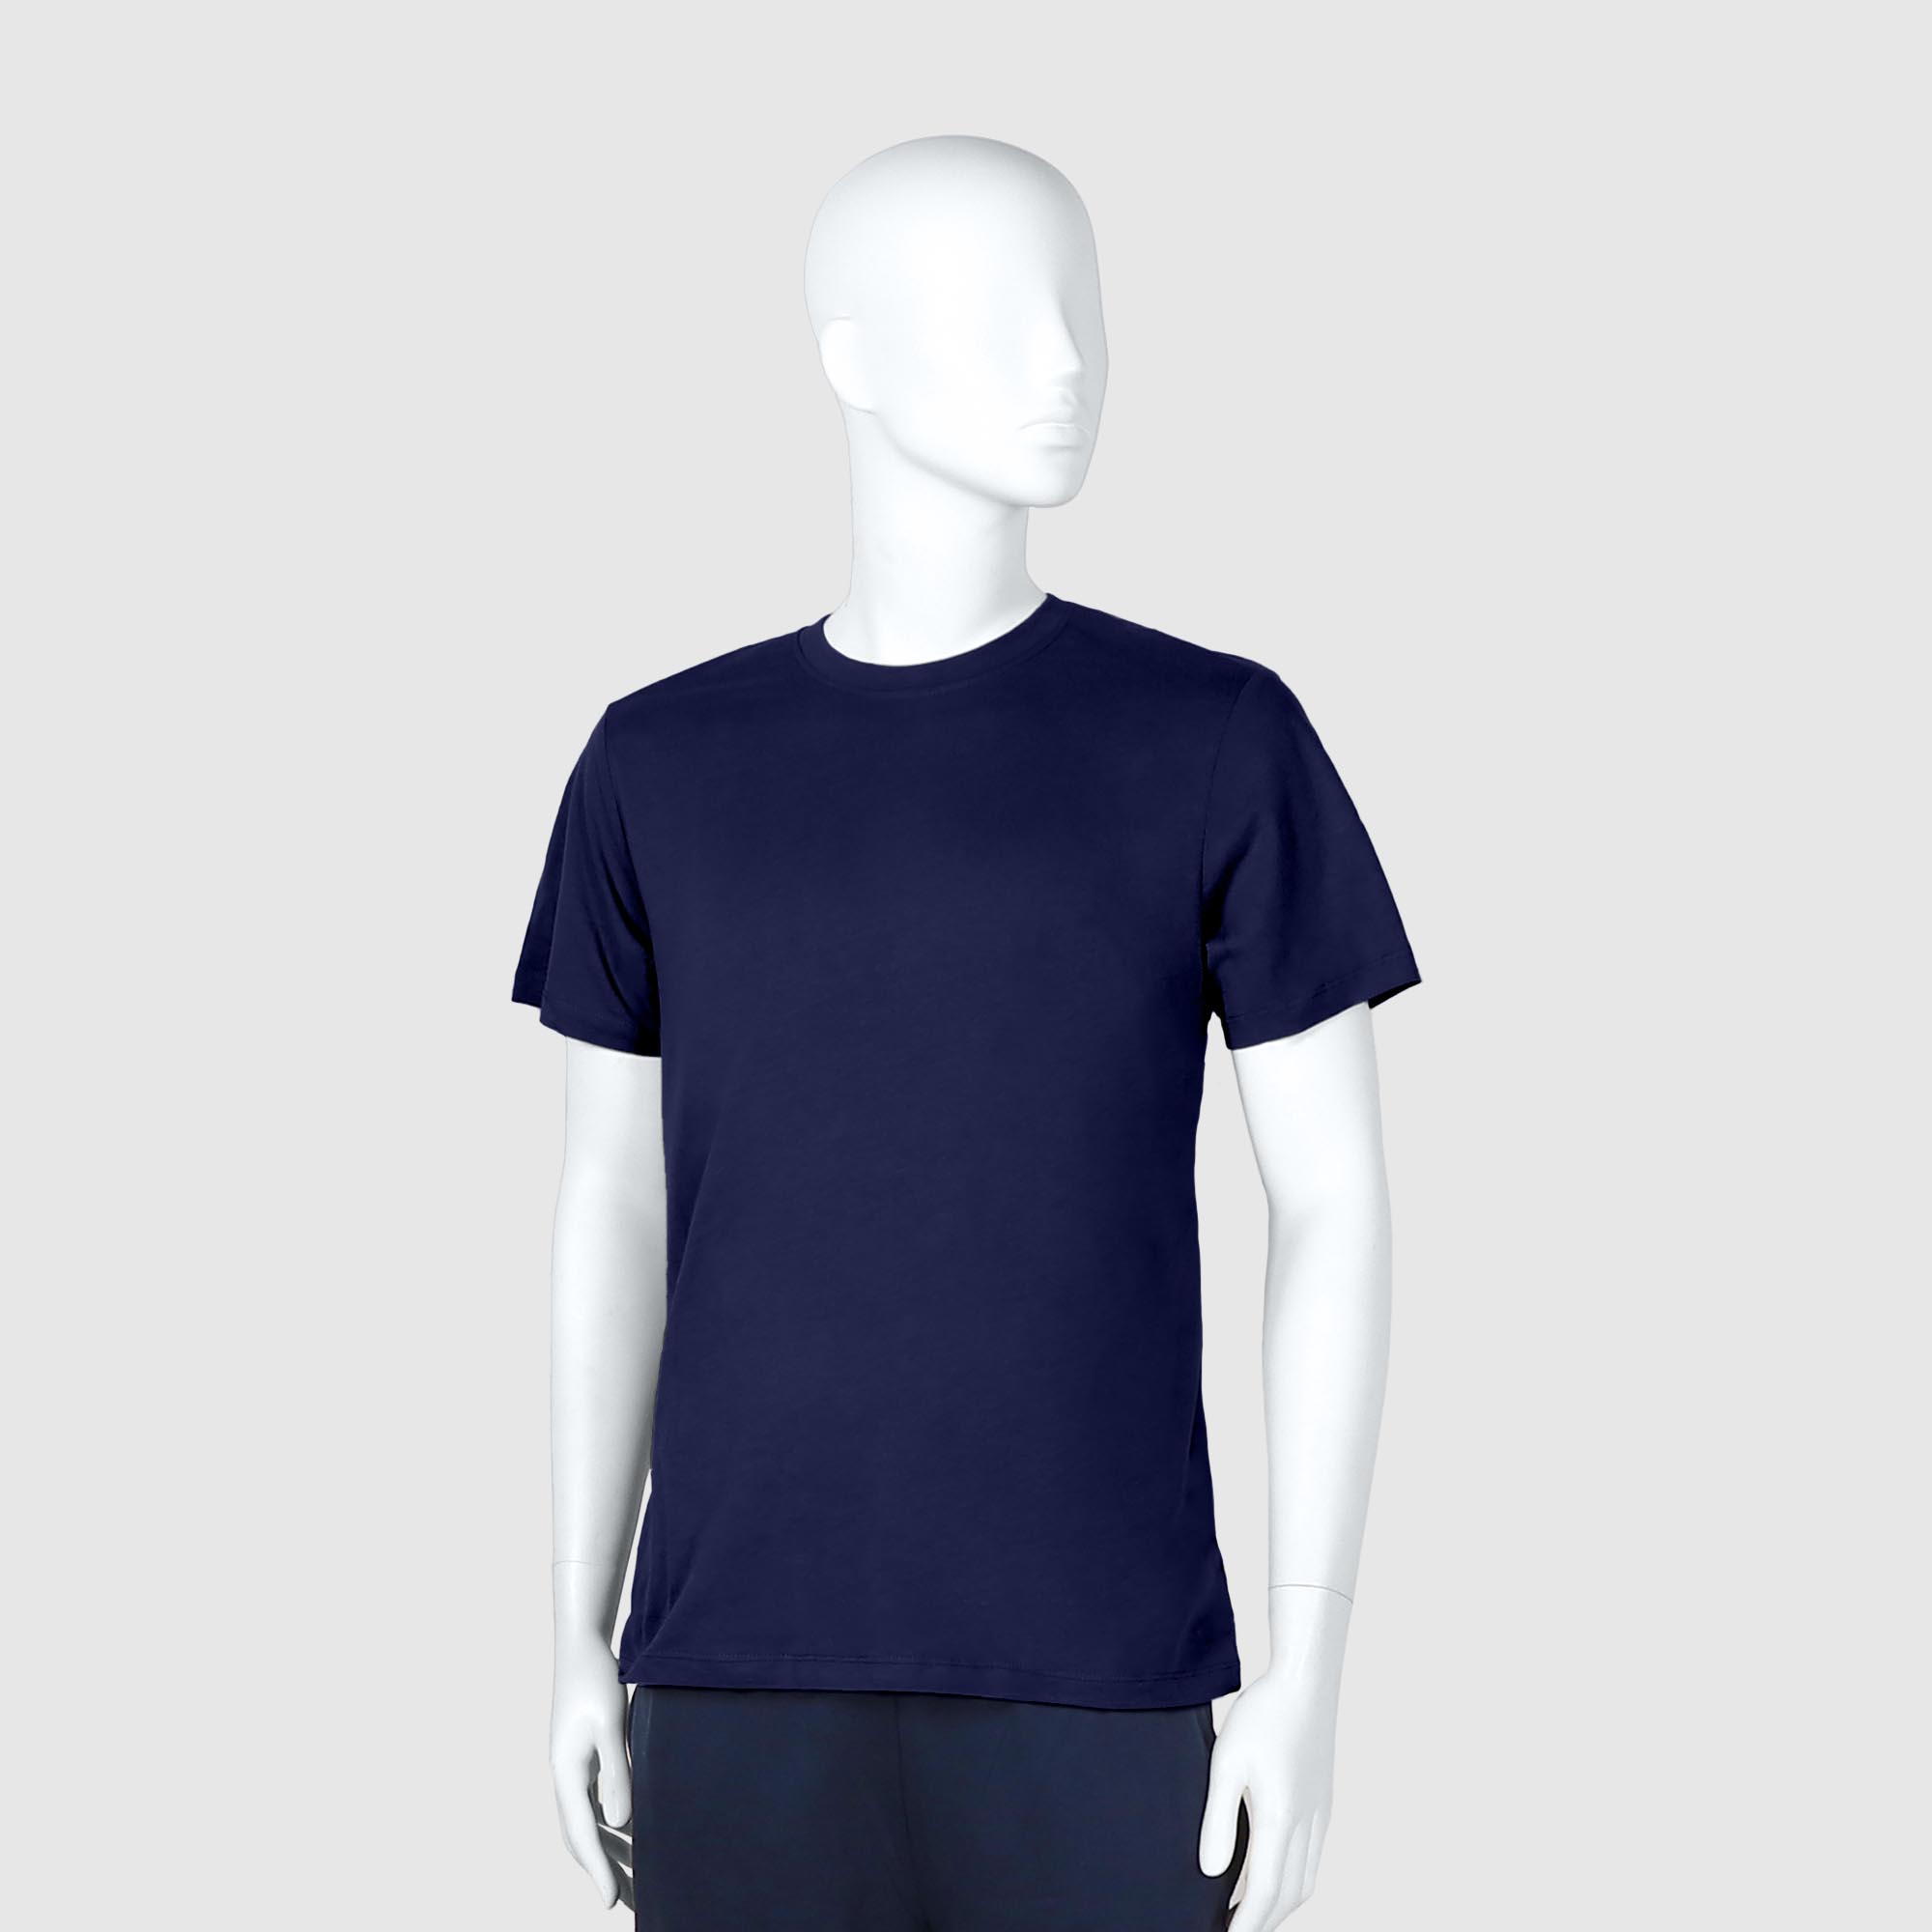 Мужская футболка Diva Teks синяя (DTD-05), цвет синий, размер 48-50